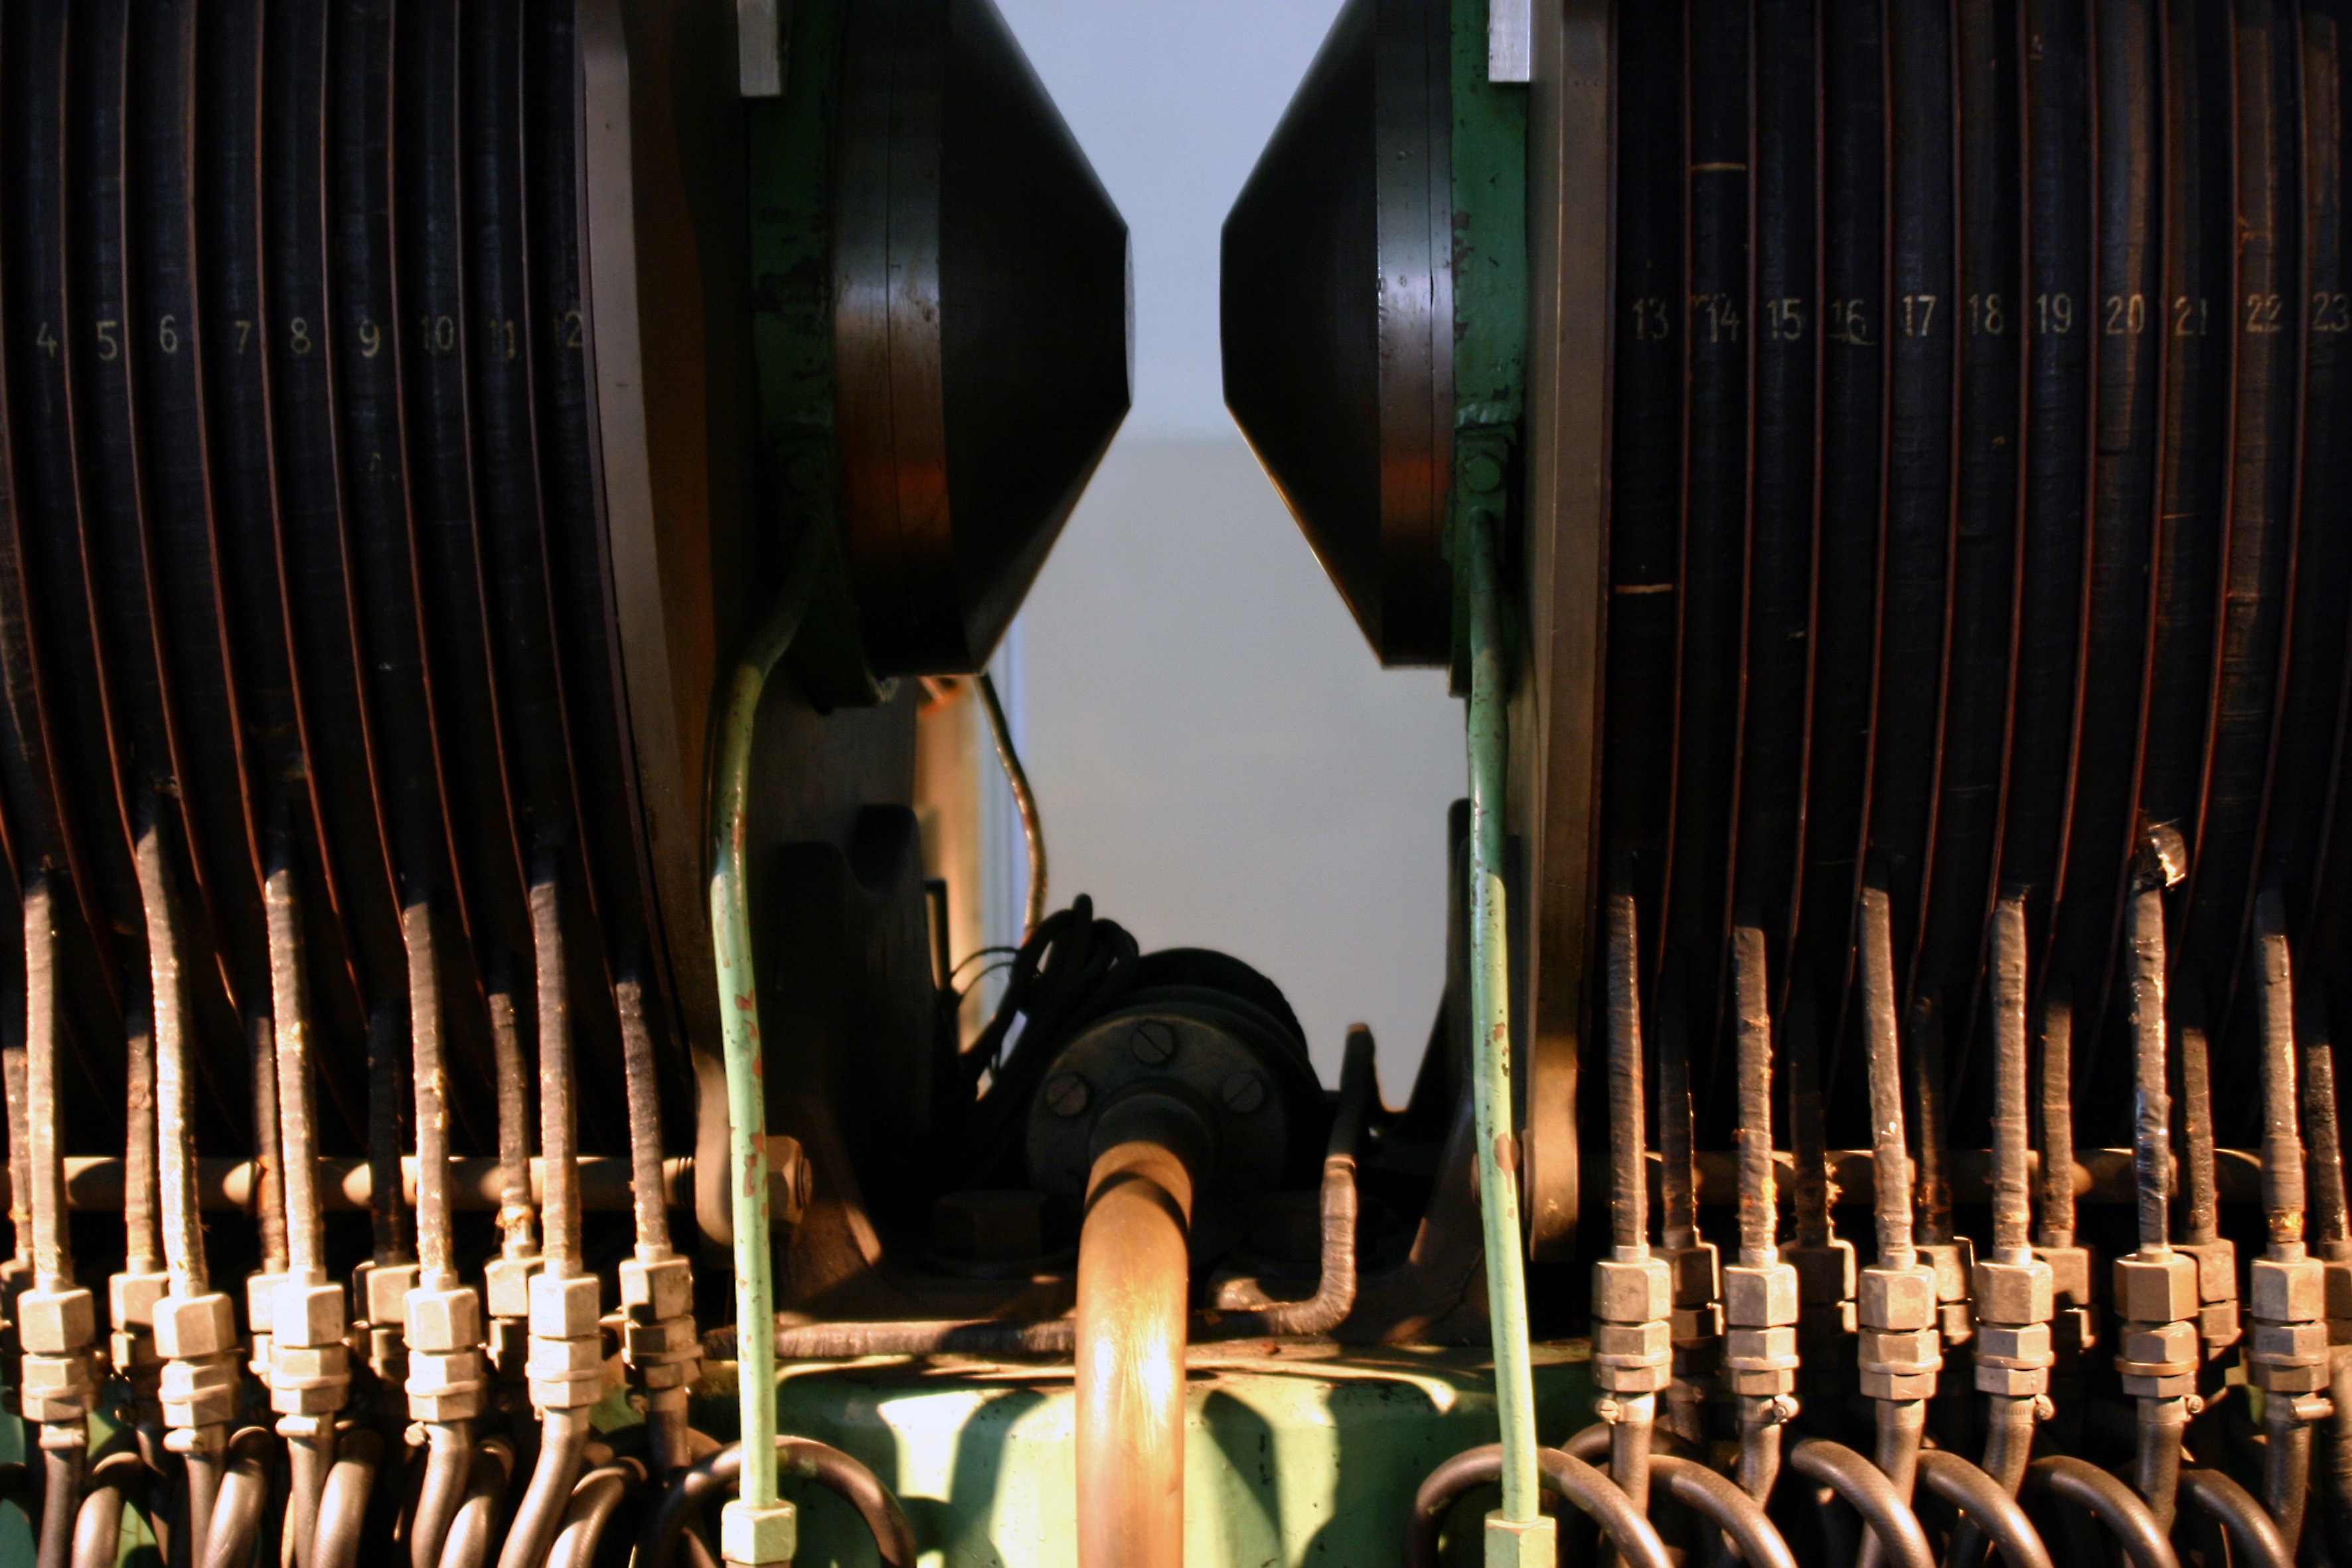 https://upload.wikimedia.org/wikipedia/commons/c/c2/Museum_Boerhaave_-_Giant_Elektromagnet_3.jpg